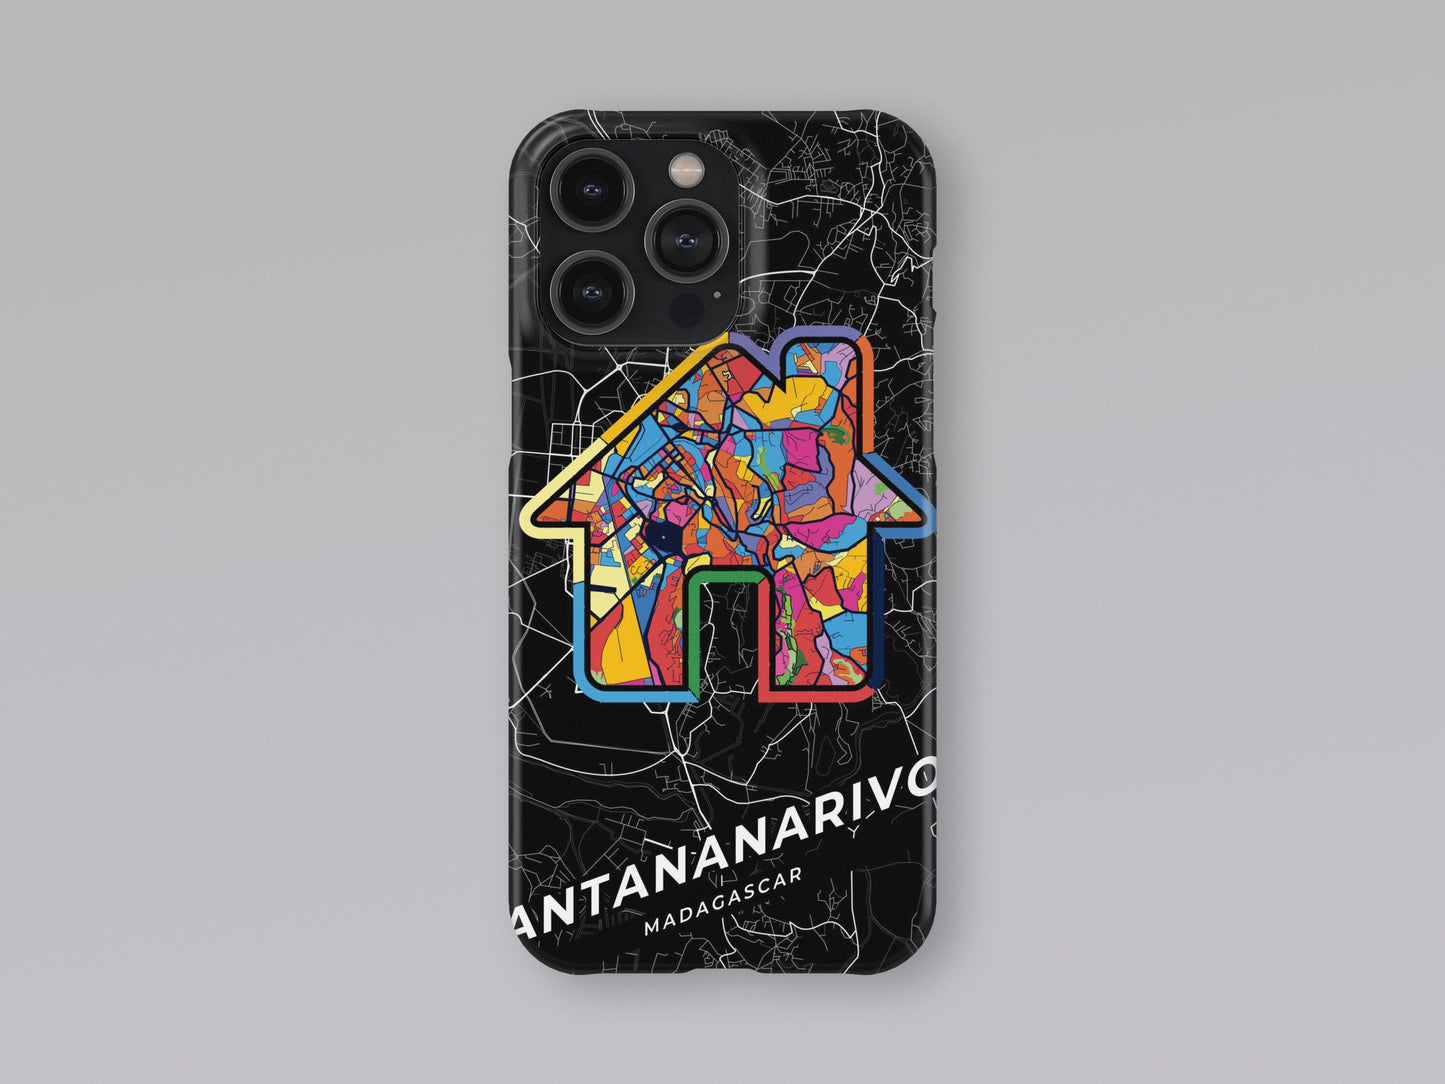 Antananarivo Madagascar slim phone case with colorful icon. Birthday, wedding or housewarming gift. Couple match cases. 3